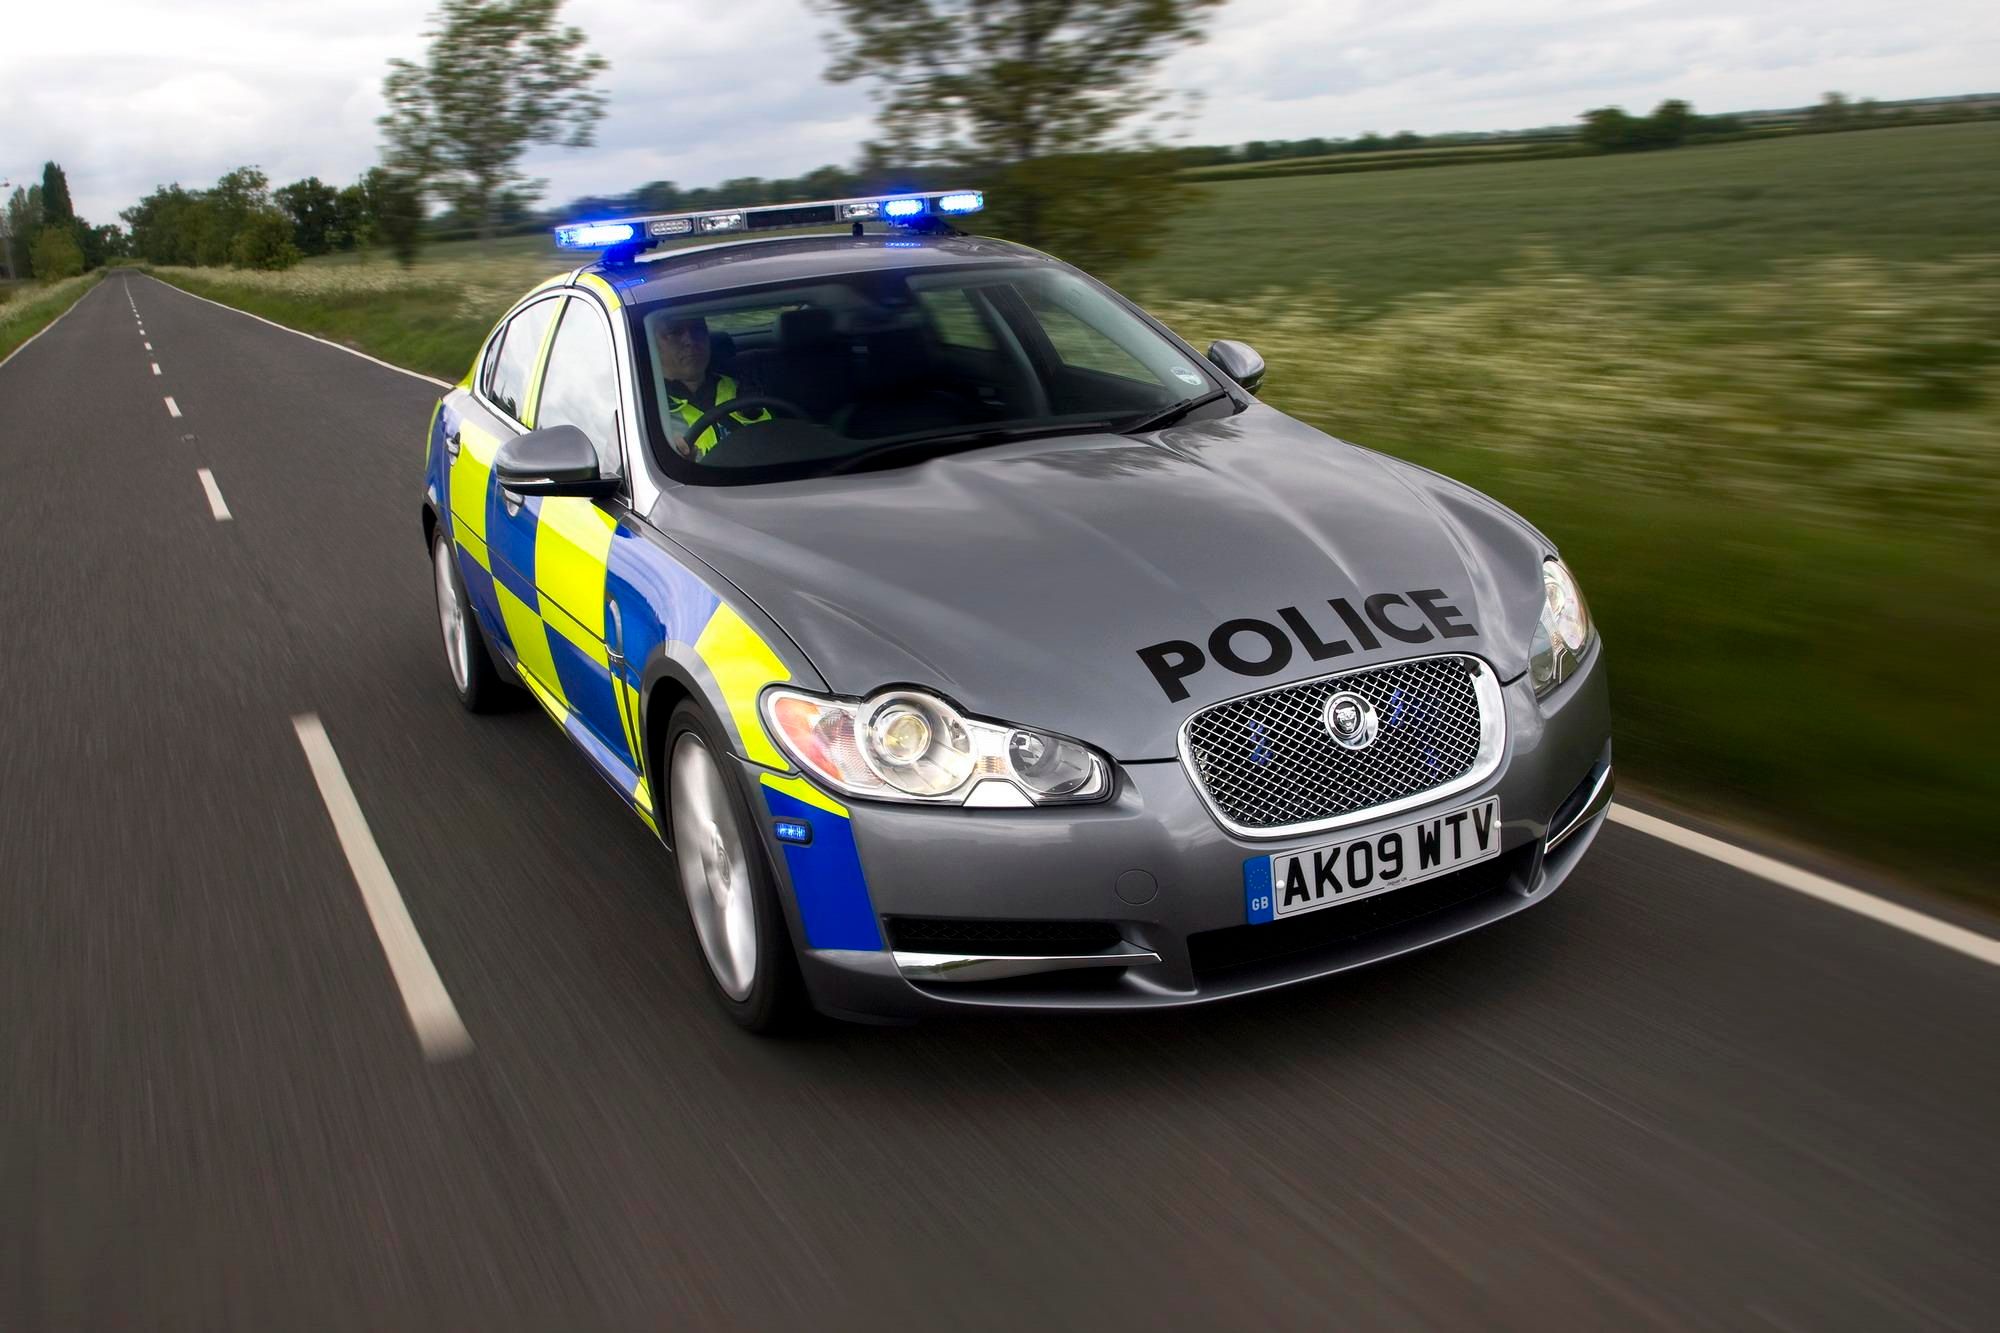 2009 Jaguar XF Police Edition